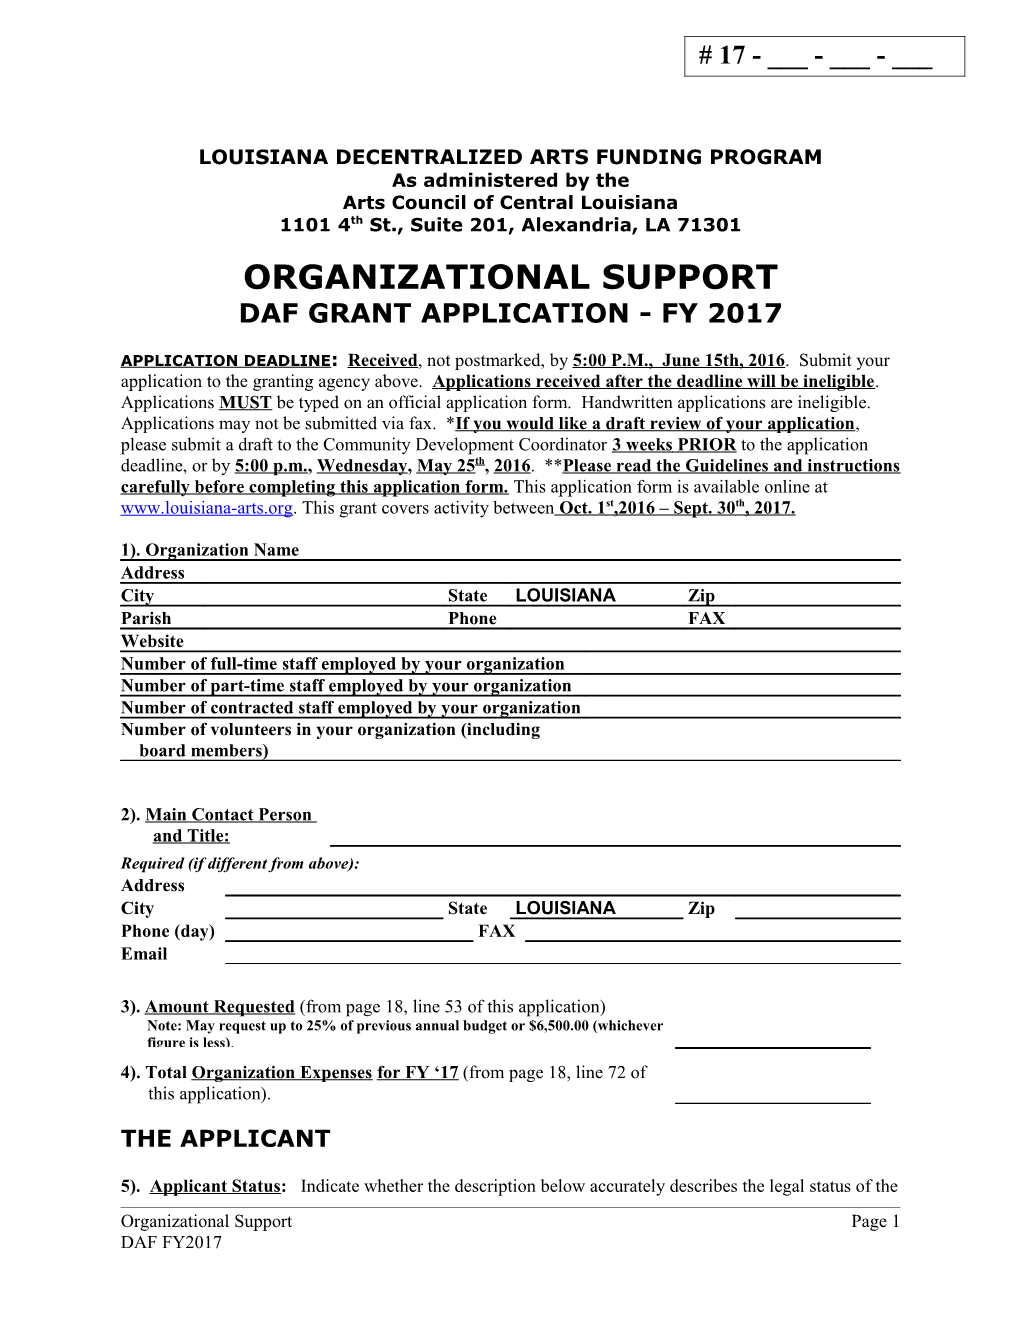 DAF Program - Organizational Support Grant Application